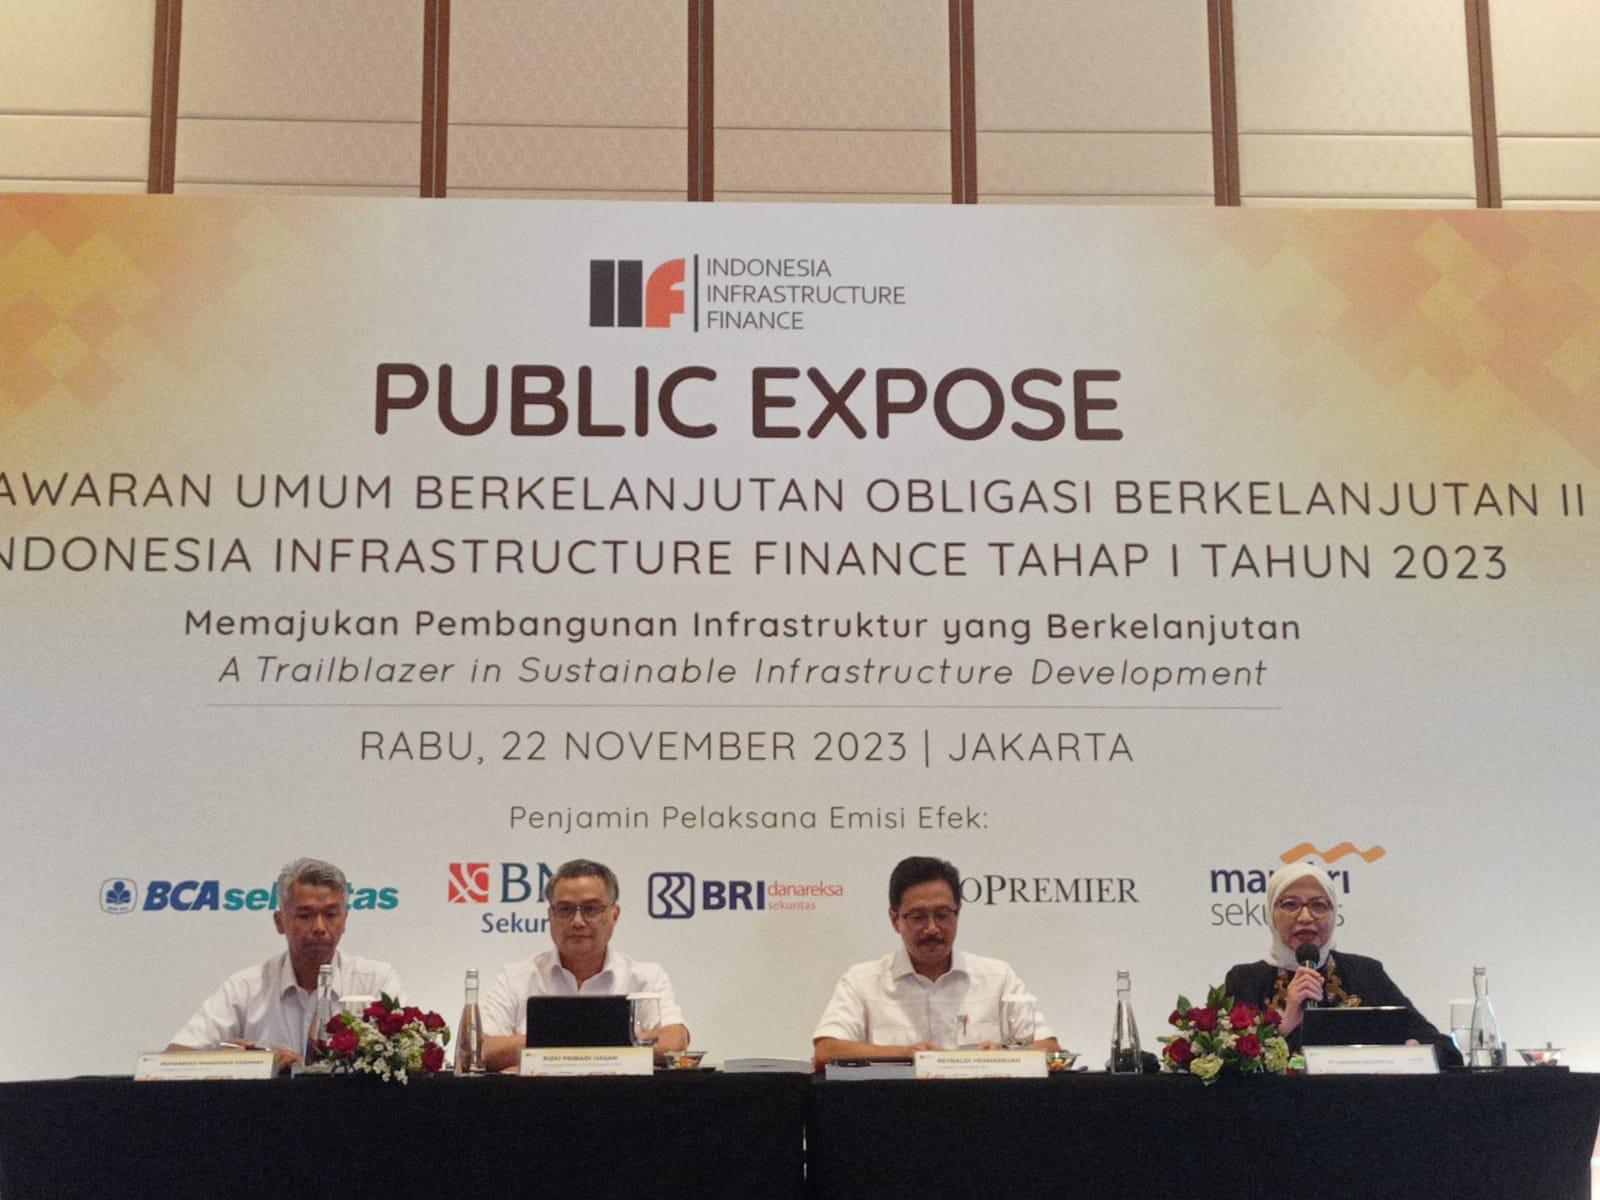 Indonesia Infrastructure Finance Patok Penyaluran Pembiayaan 2024 Naik 20% Jadi Rp3 T